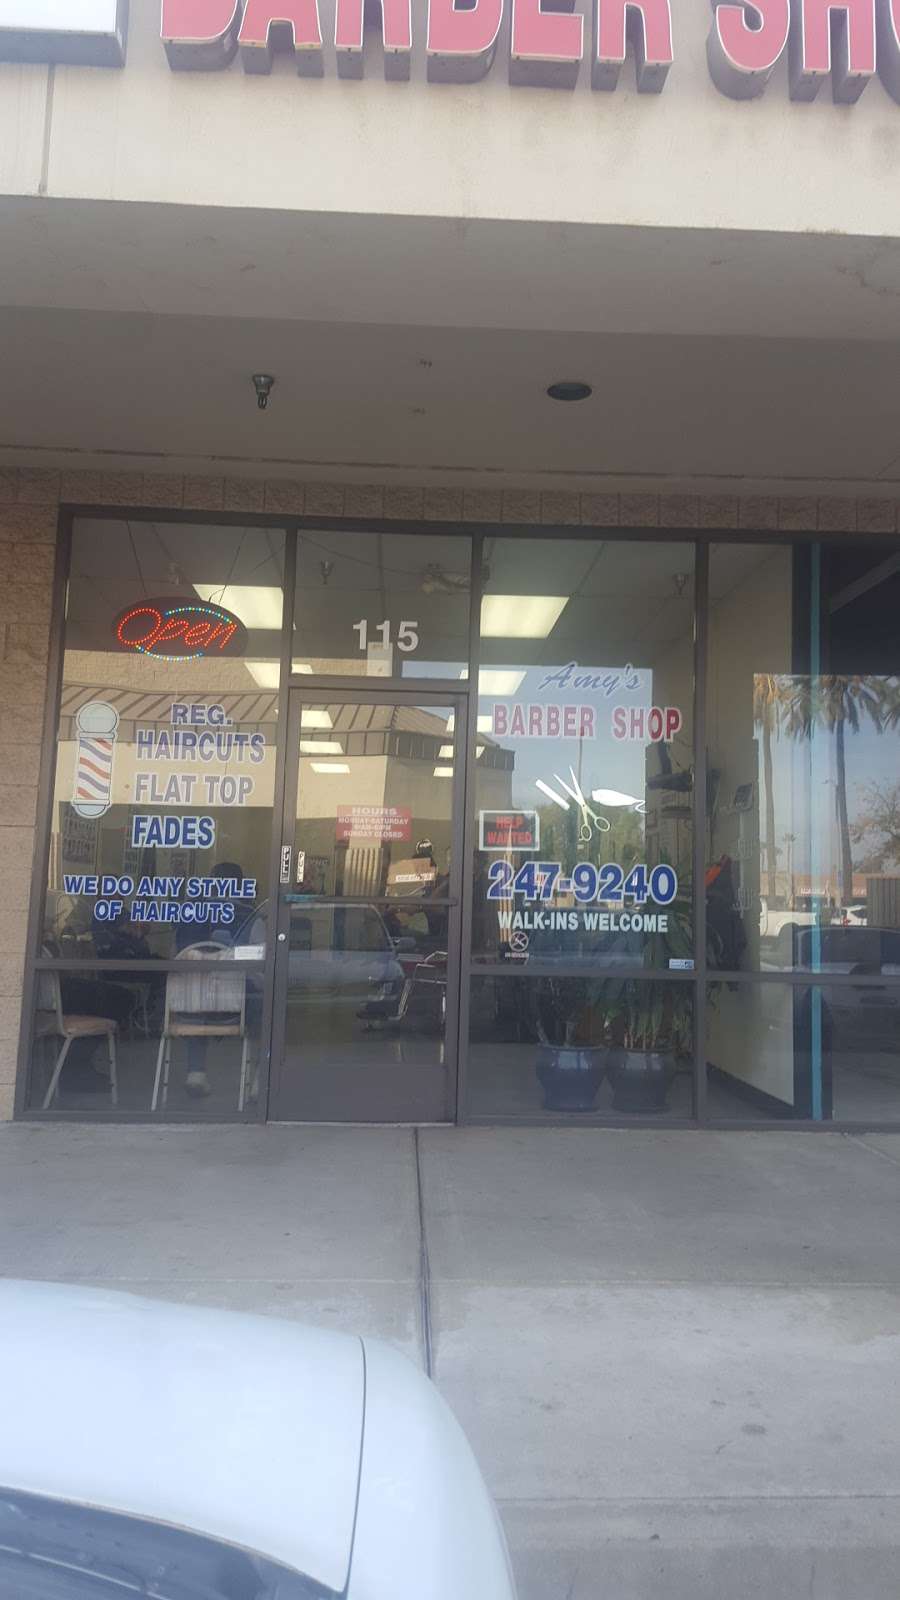 Amys Barber Shop | 24021 Alessandro Blvd #115, Moreno Valley, CA 92553 | Phone: (951) 247-9240